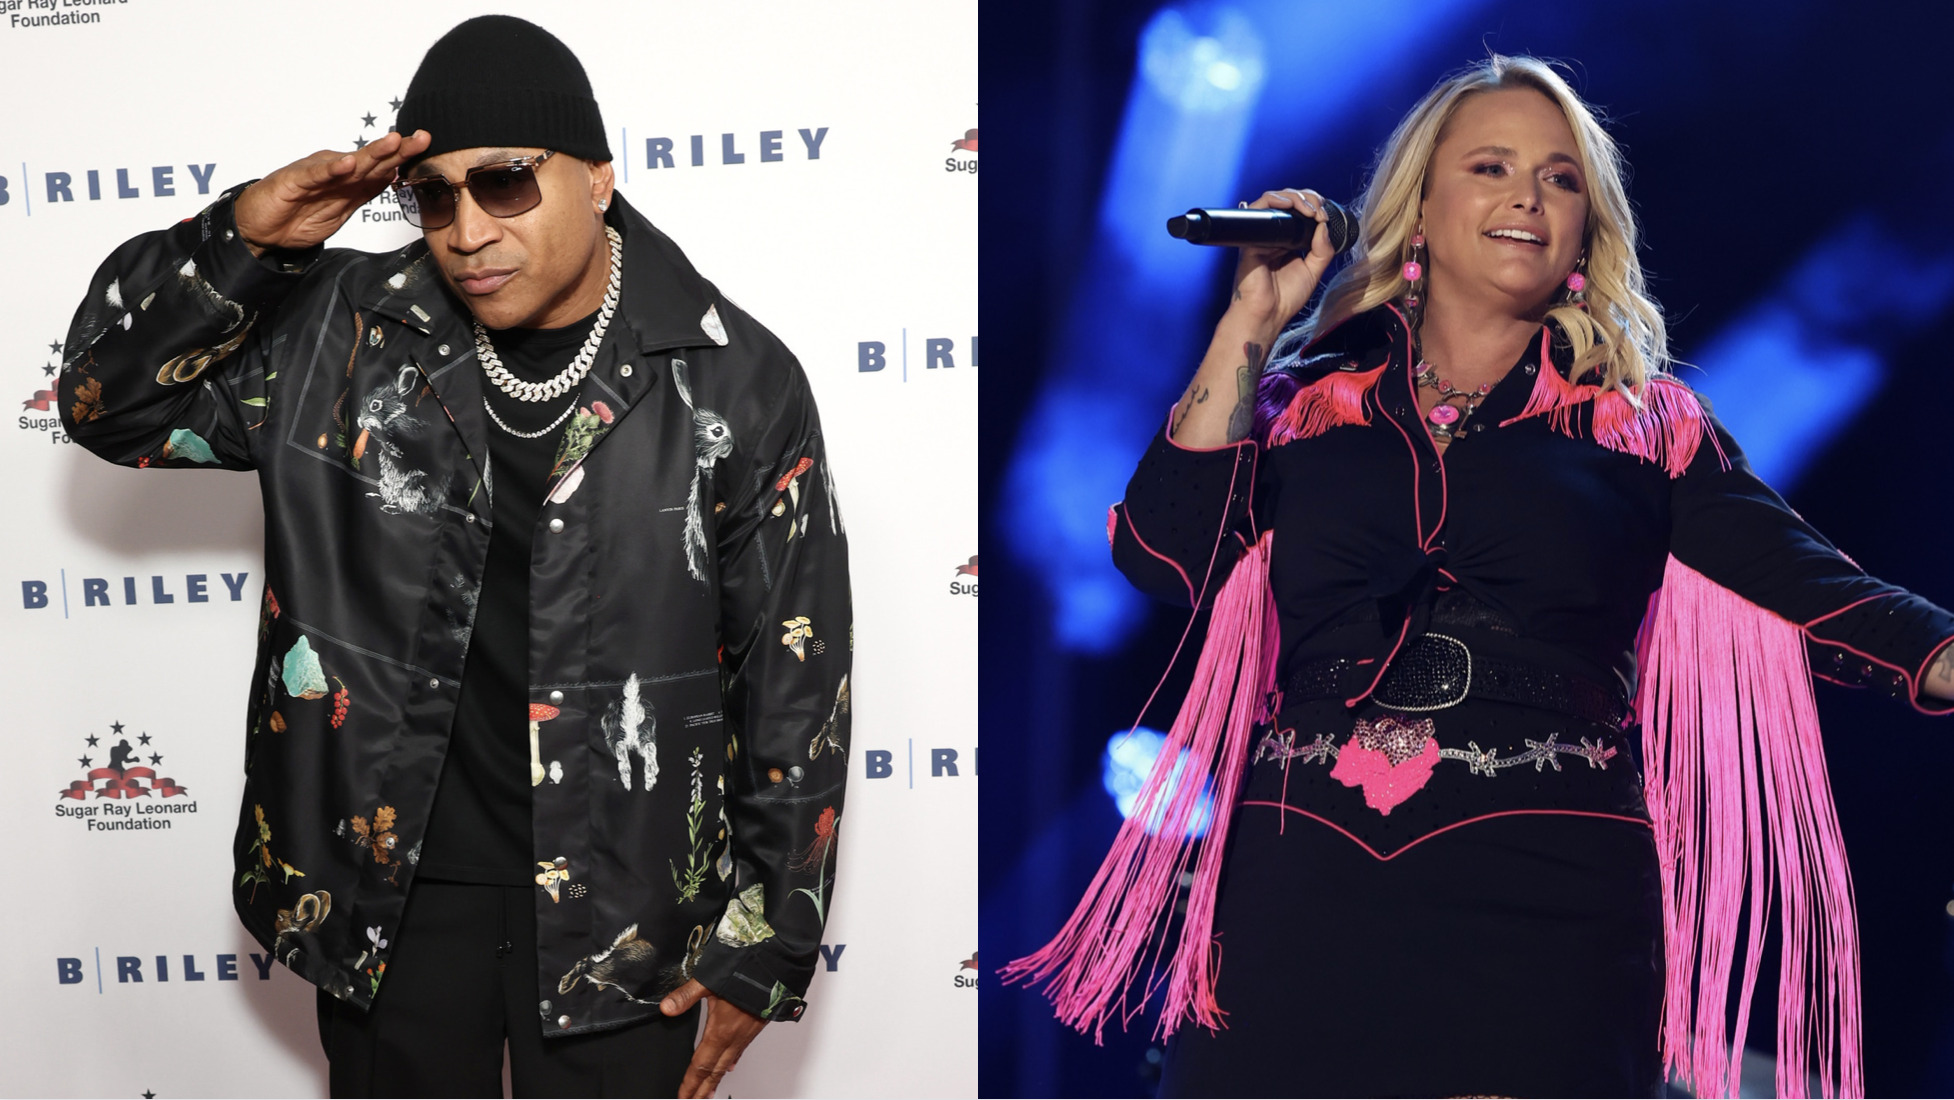 LL Cool J Jokingly Tells Miranda Lambert to 'Get Over' Concert